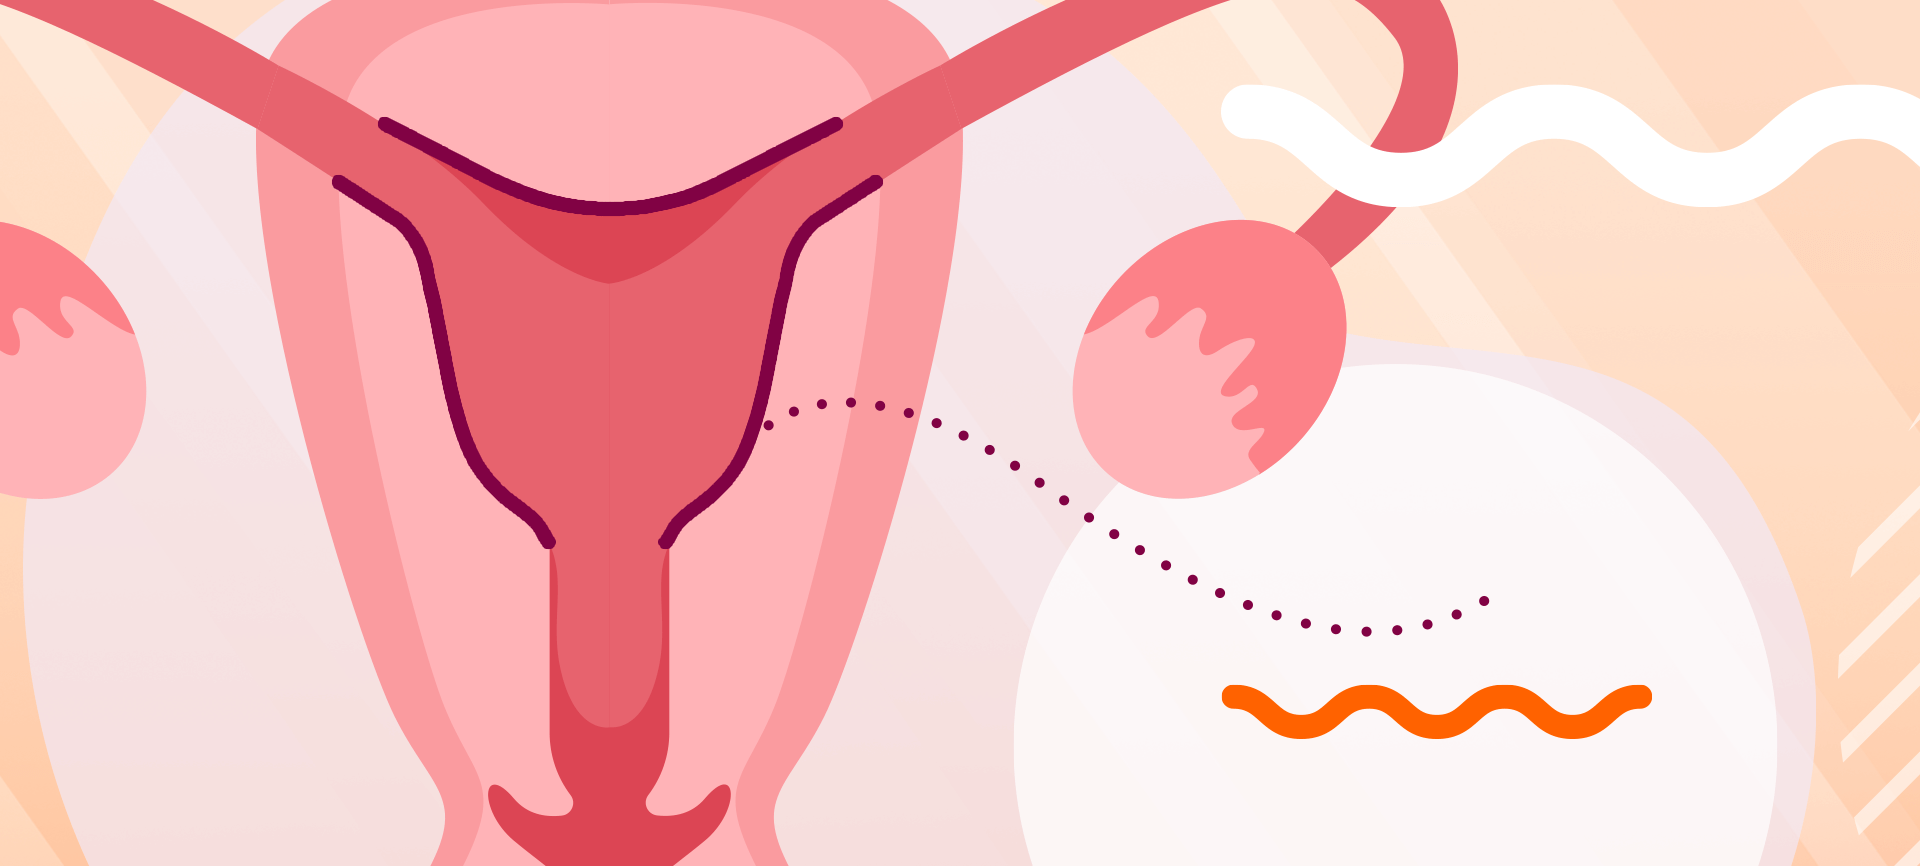 Preparo endometrial: como é feito na FIV?